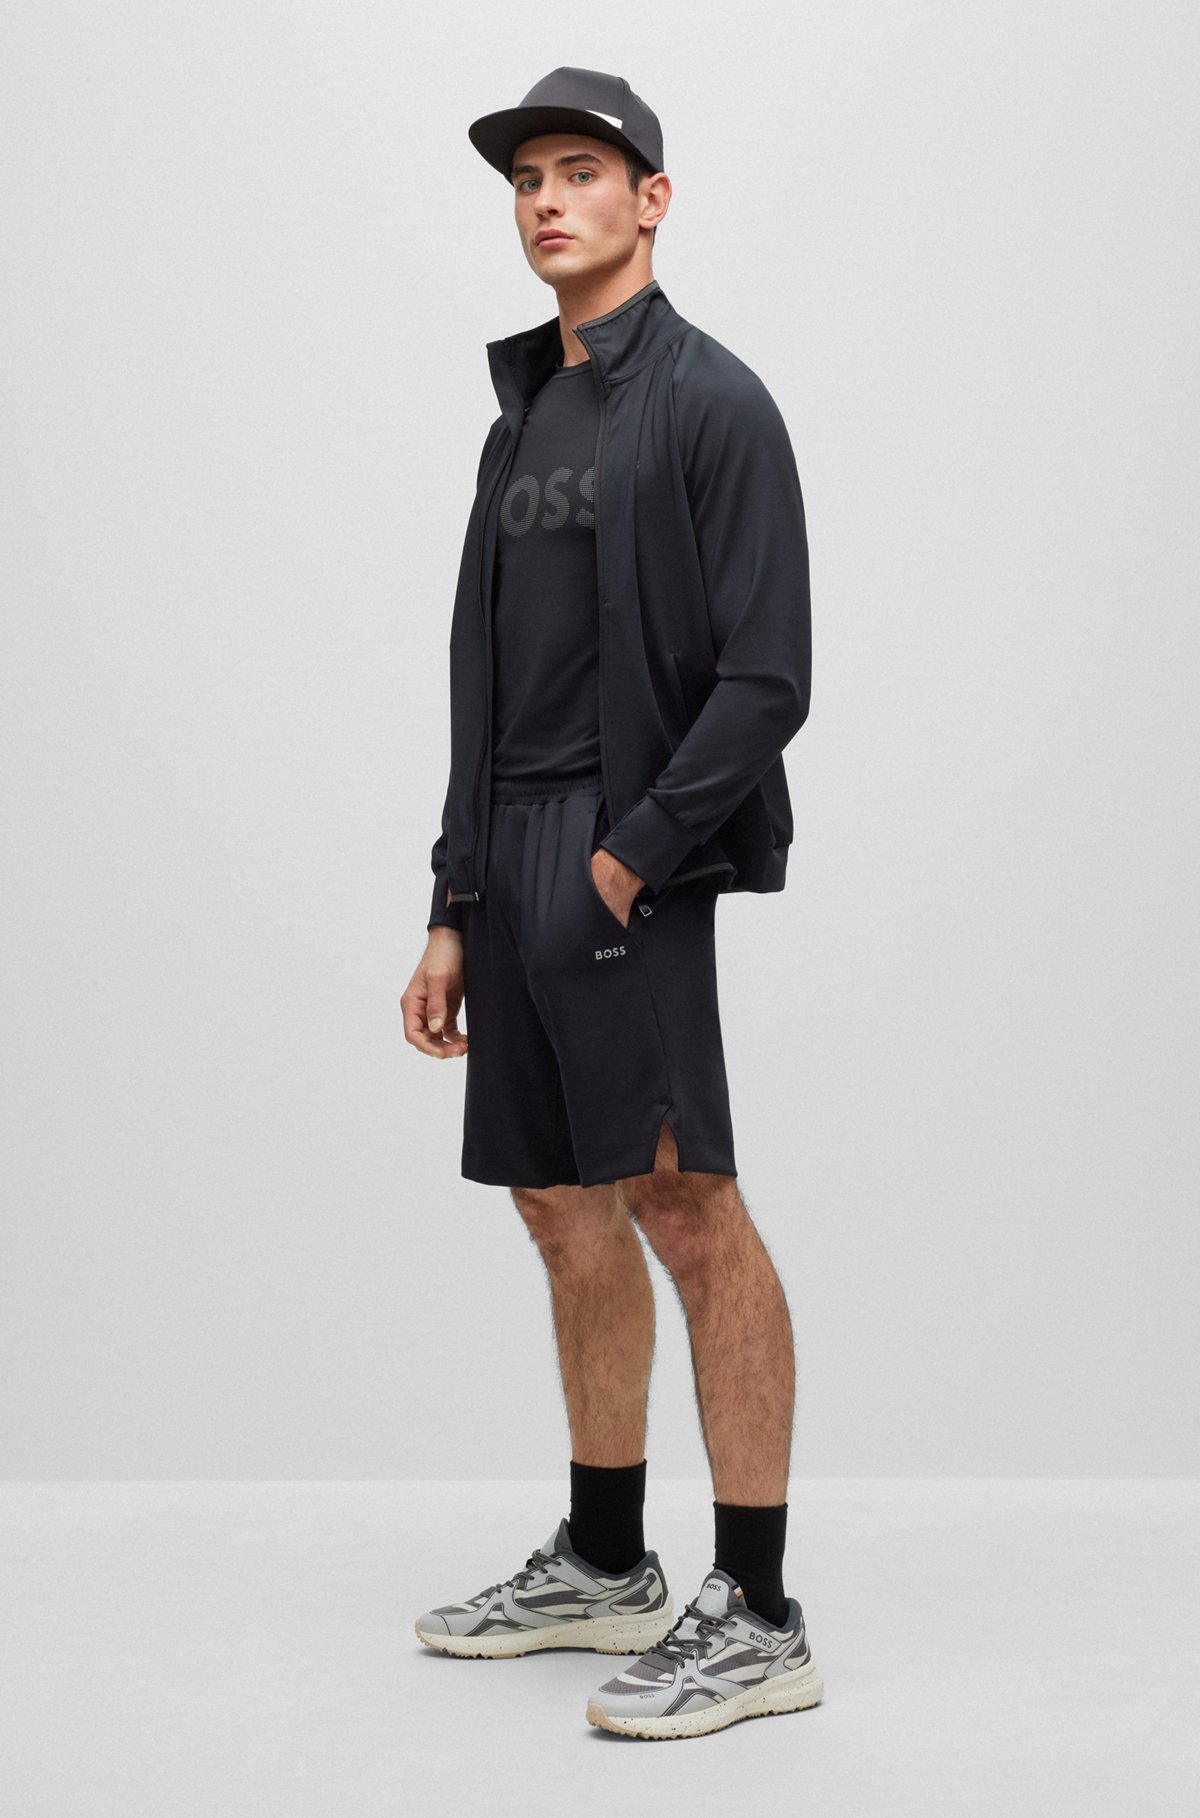 Regular-fit shorts with rear zip pocket, Black